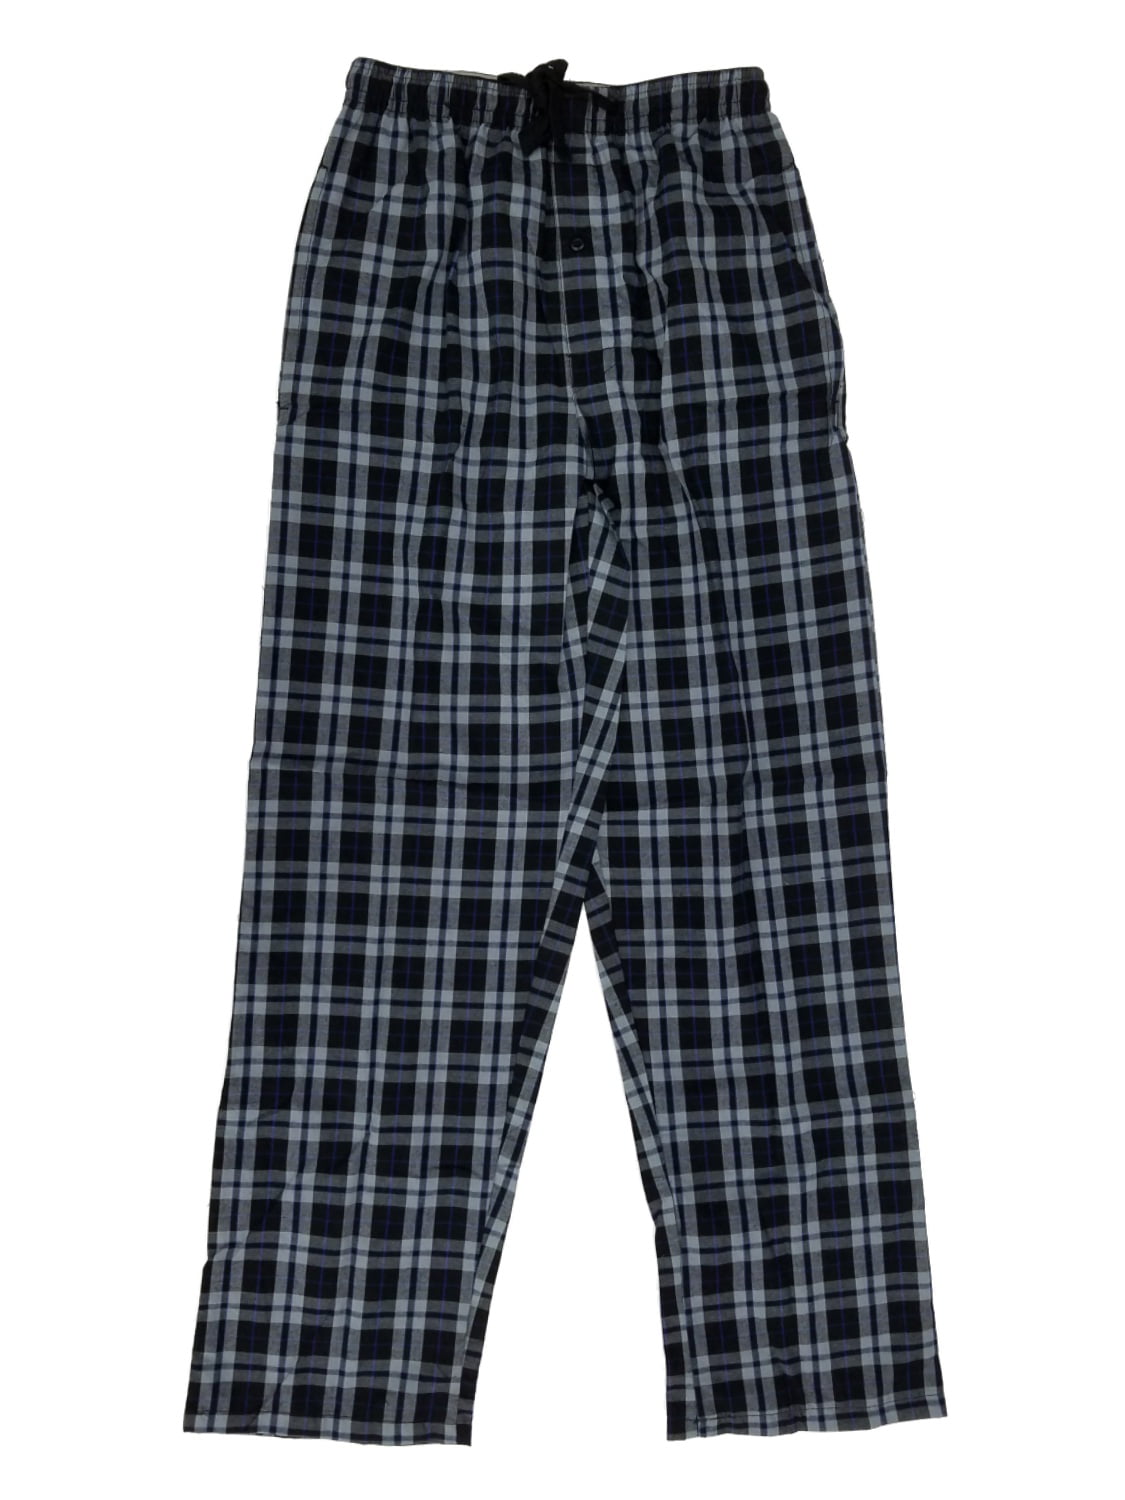 Hane Tagless Pajamas Knit T Top & Woven Plaid Pants